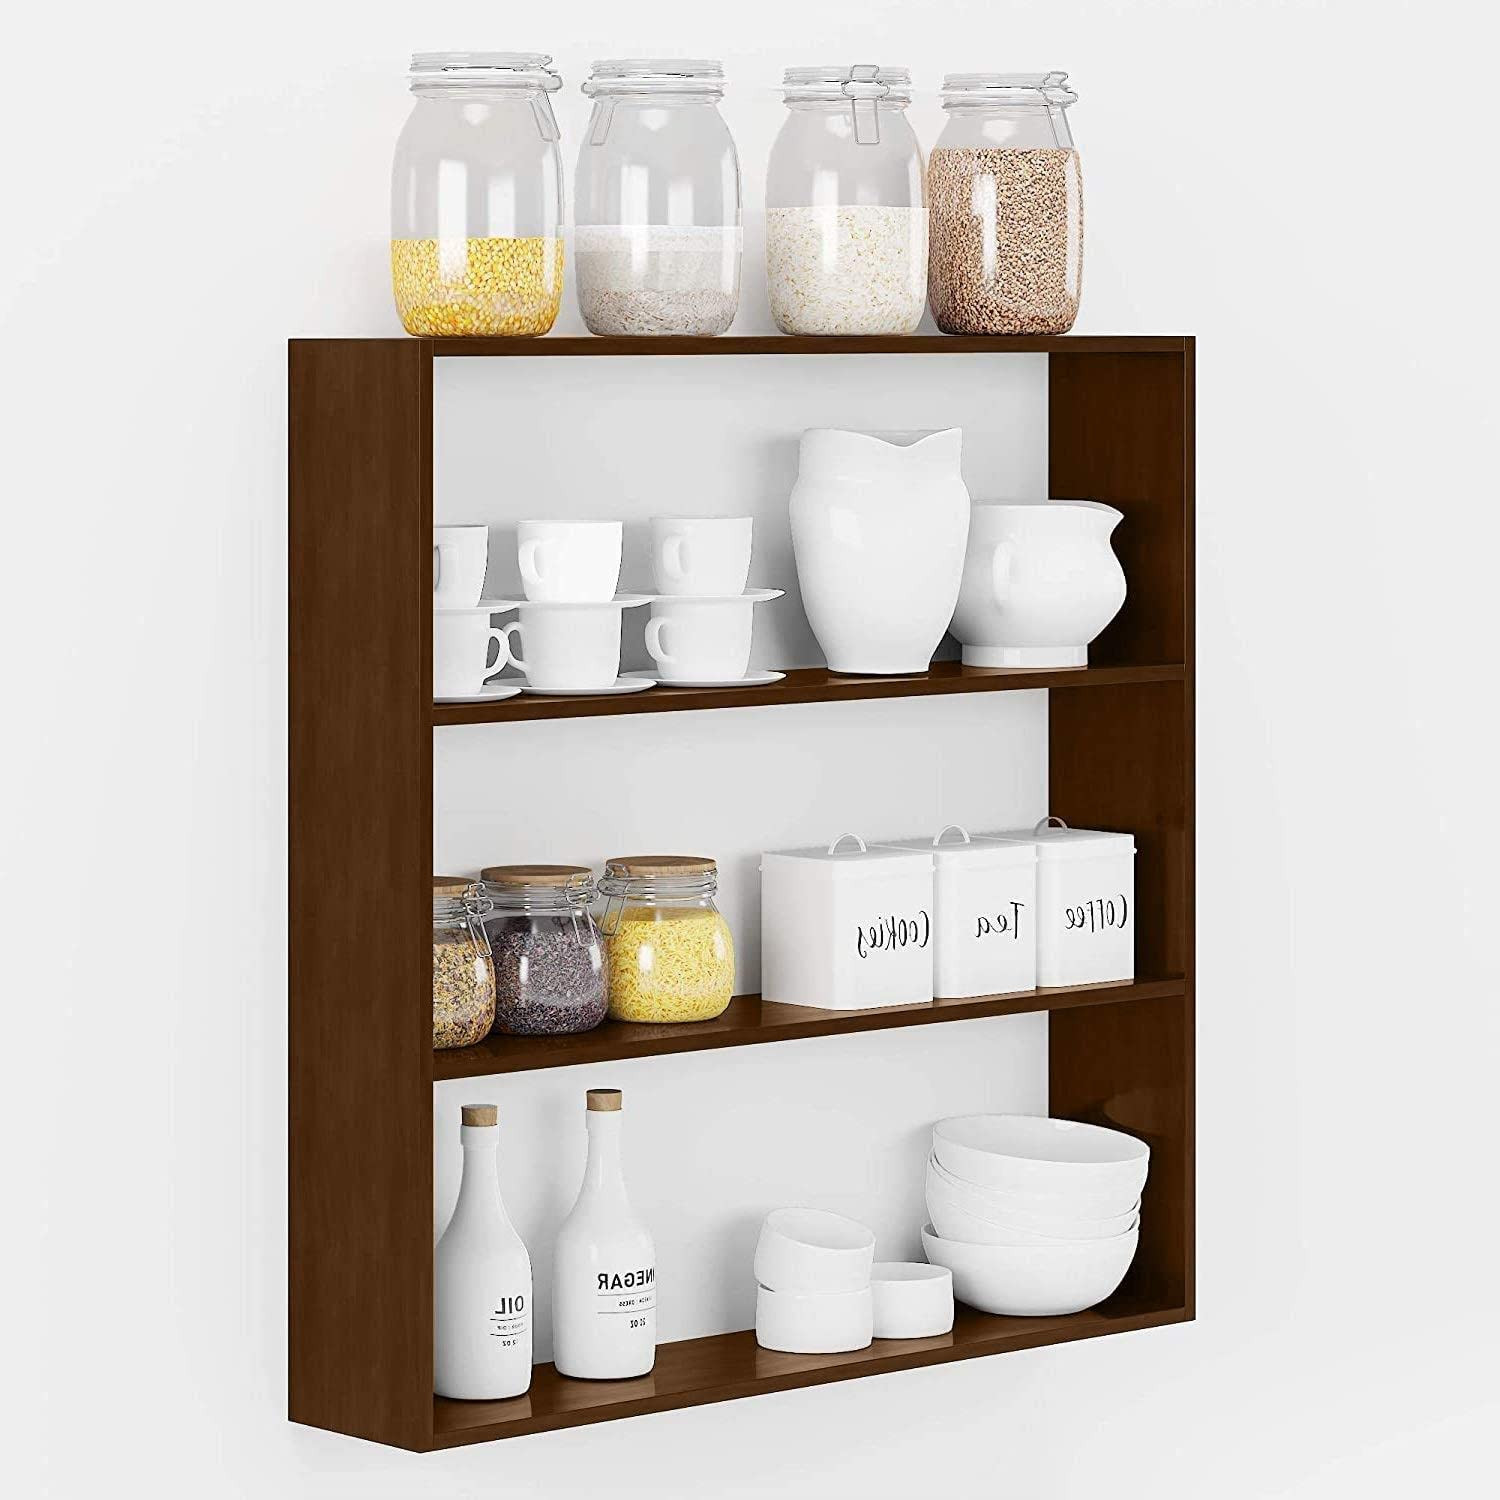 Kuber Industries Kitchen Wall Shelf|Wooden Handicraft Wall Mounted 3 Shelves for Kitchen|Multipurpose Storage Wall Shelf,30